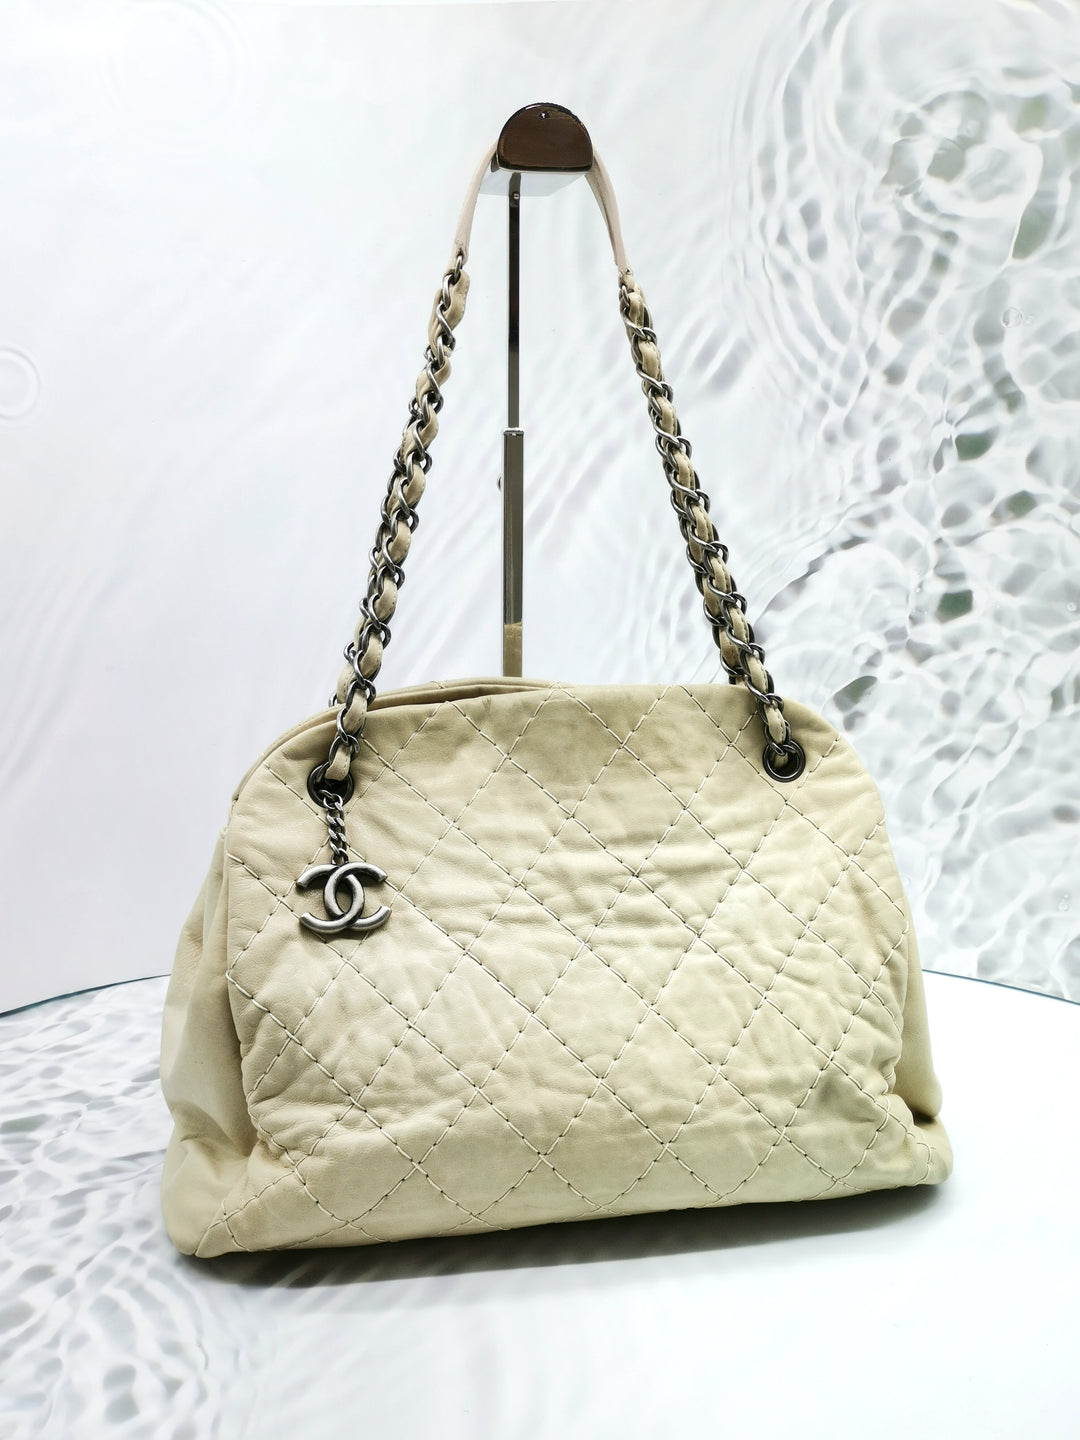 Chanel Just Mademoiselle Bag